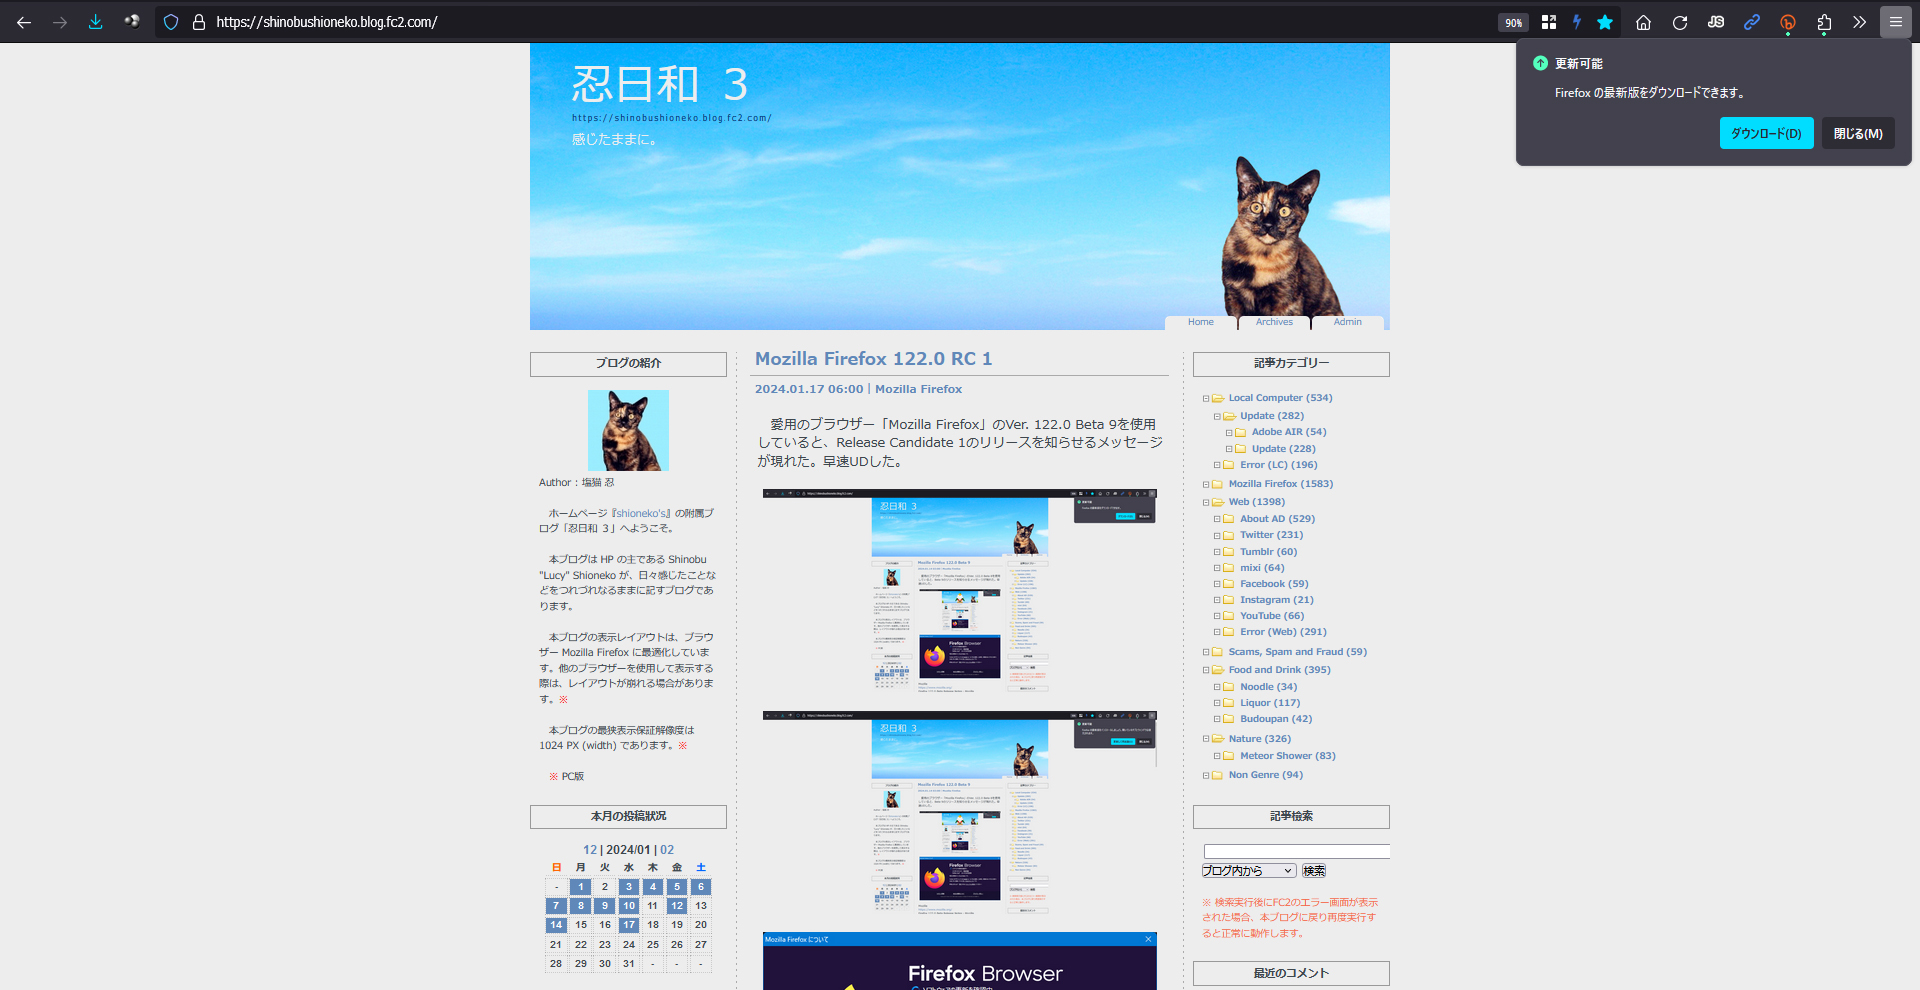 Mozilla Firefox 123.0 Beta 1